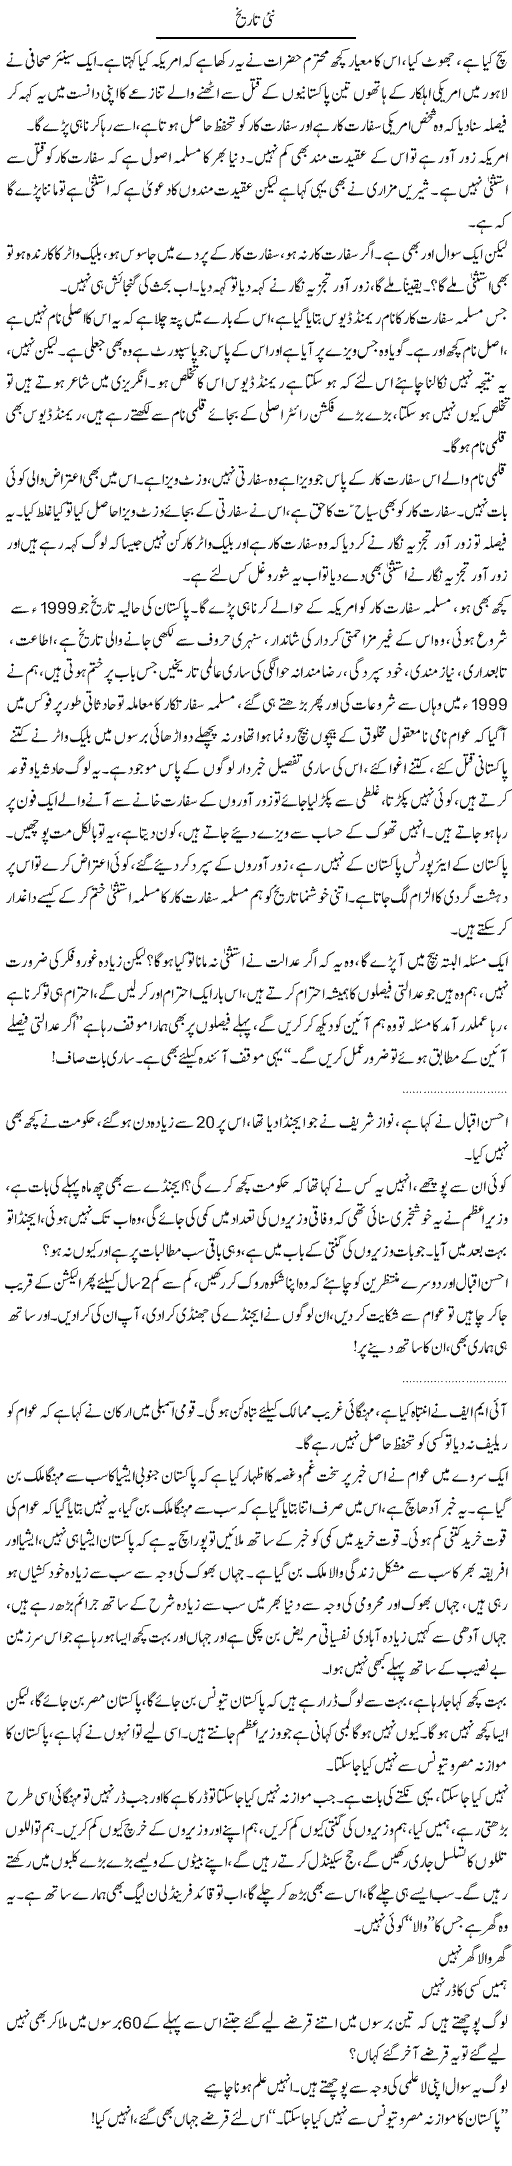 New History Express Column Abdullah Tariq 3 February 2011